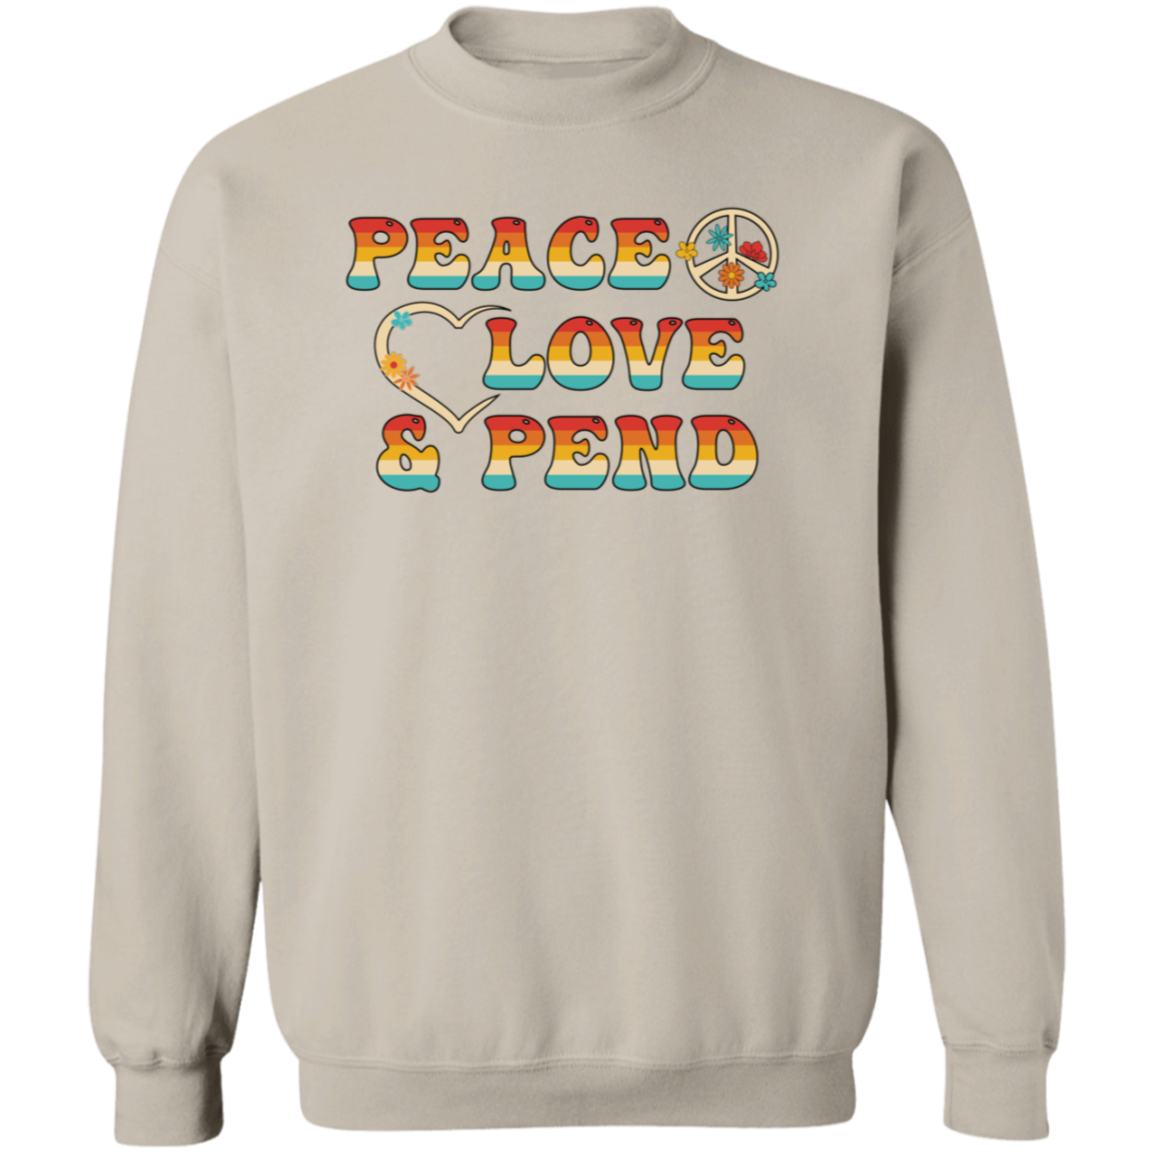 Peace, Love & Pend - Sweatshirt